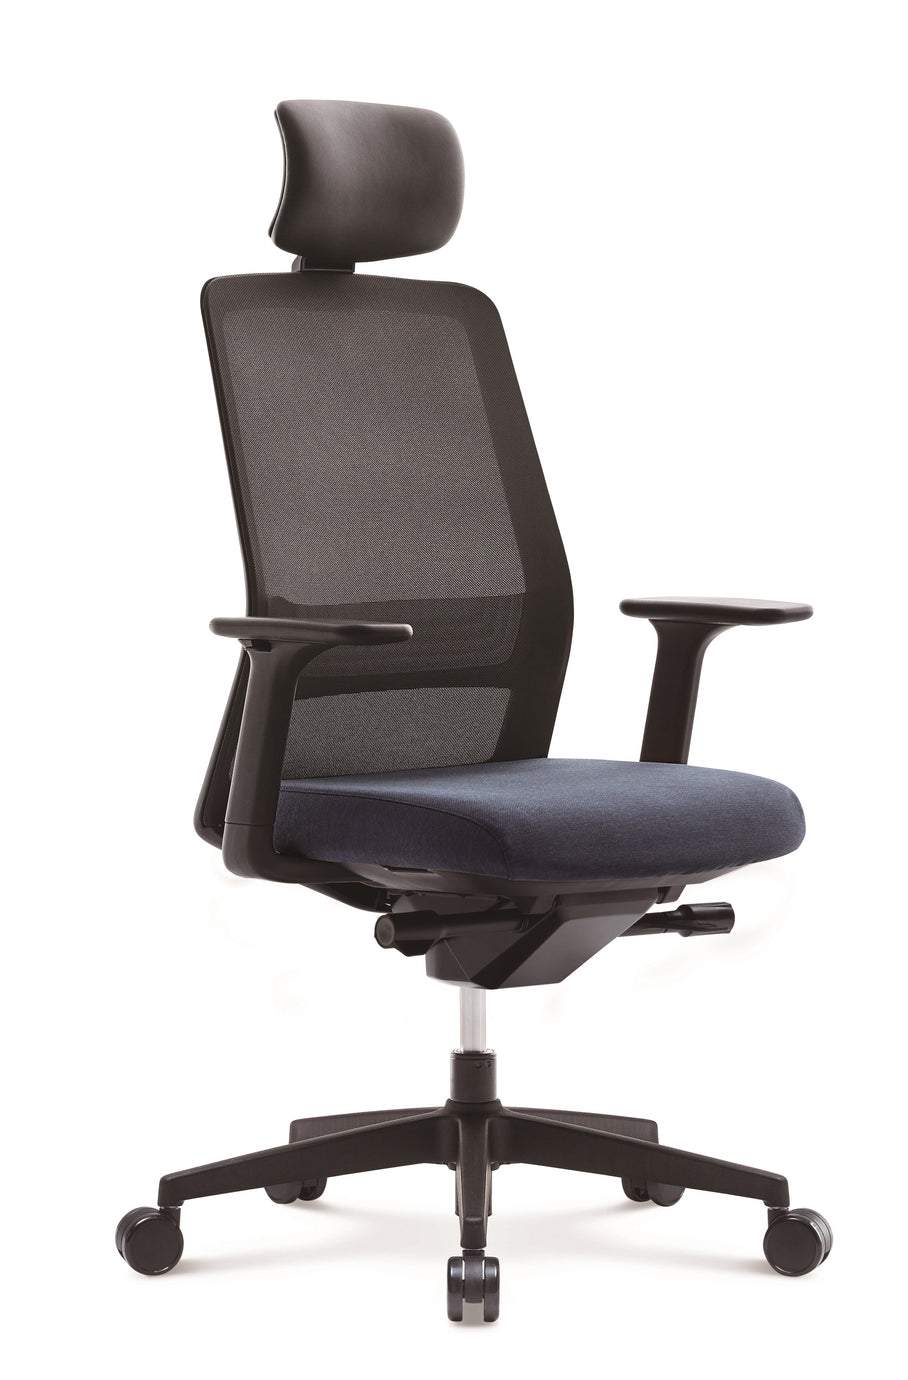 FURSYS SIDIZ T40 Black Frame Home Office Desk Chair with Headrest - SIHOO AustraliaFURSYS SIDIZ T40 Black Frame Home Office Desk Chair with Headrest